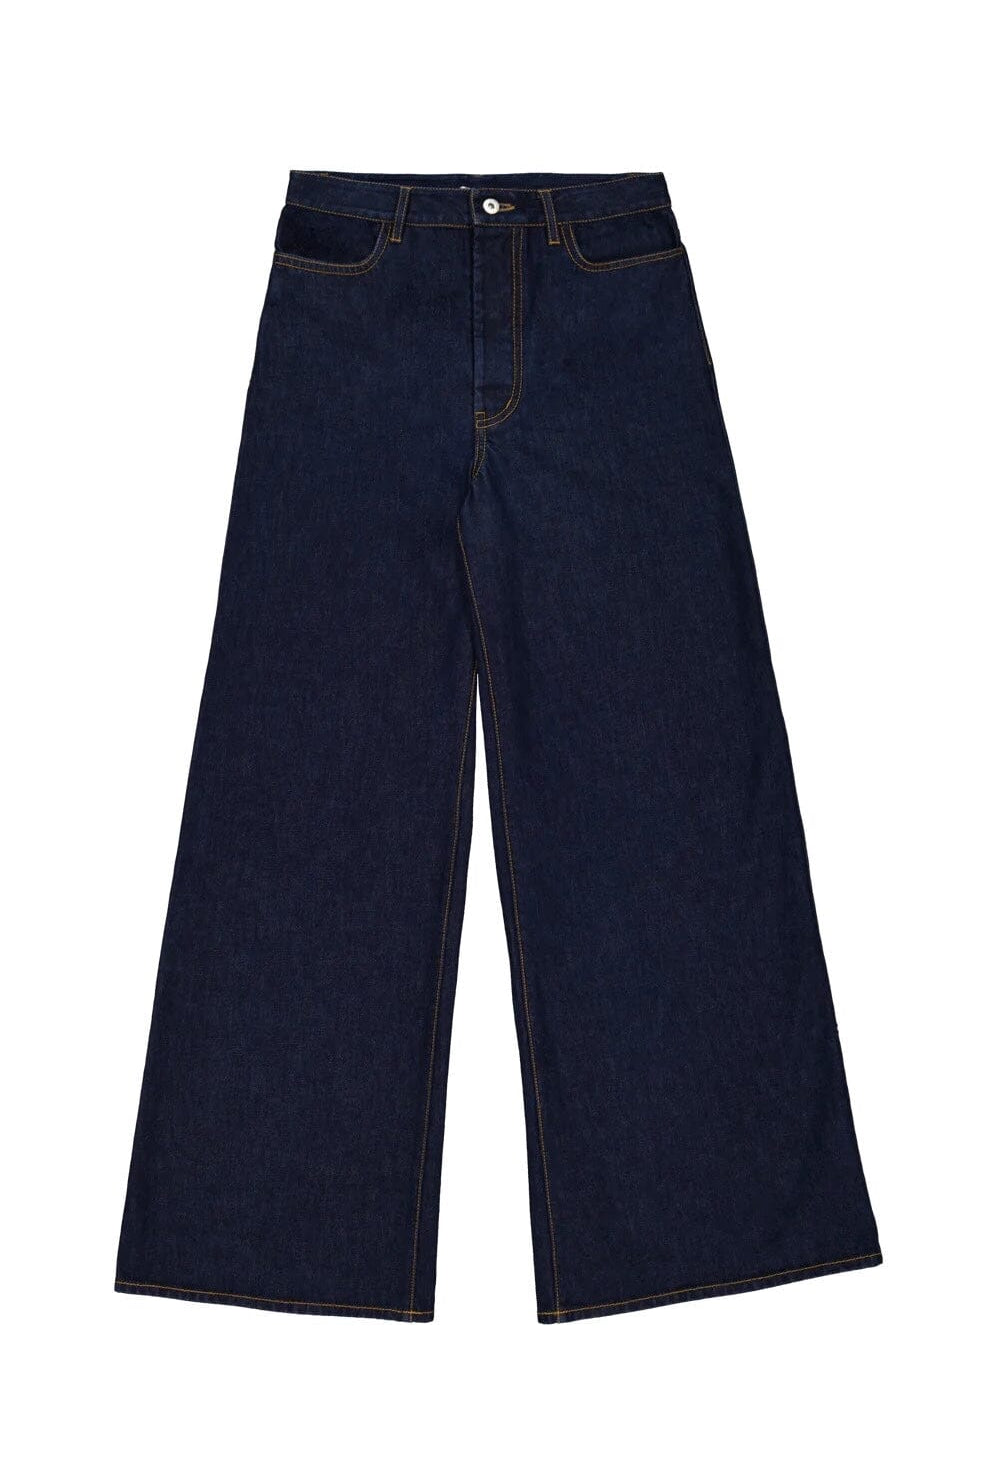 Kowtow | High Puddle Jeans In Indigo Denim - SHOP YUCCA Pants KOWTOW - YUCCA 